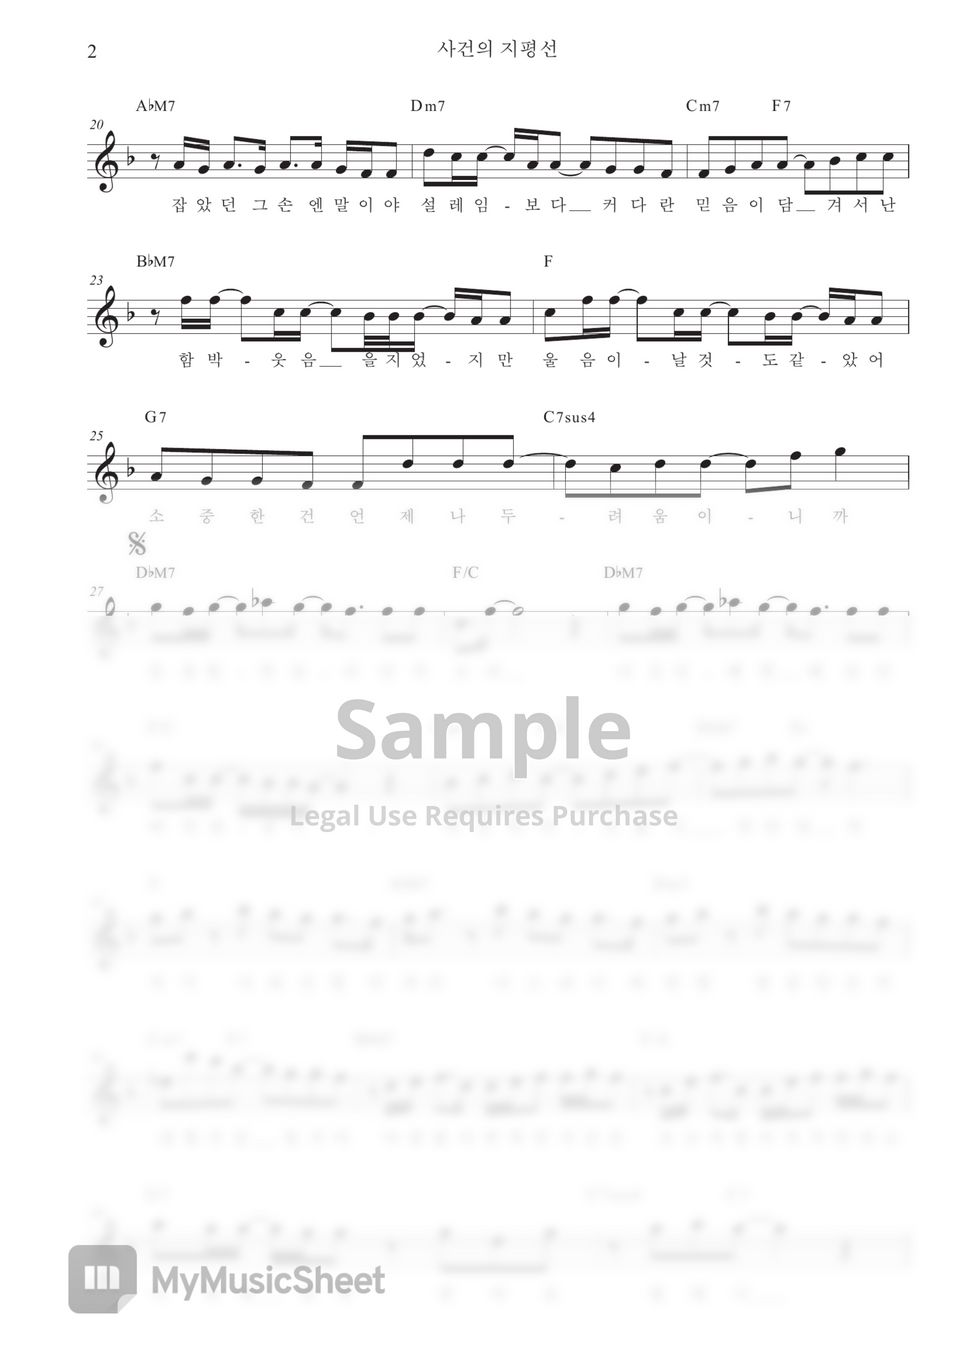 YOUNHA - Event Horizon F Major (Clarinet / Lyrics / Chords) by thesaxophonist